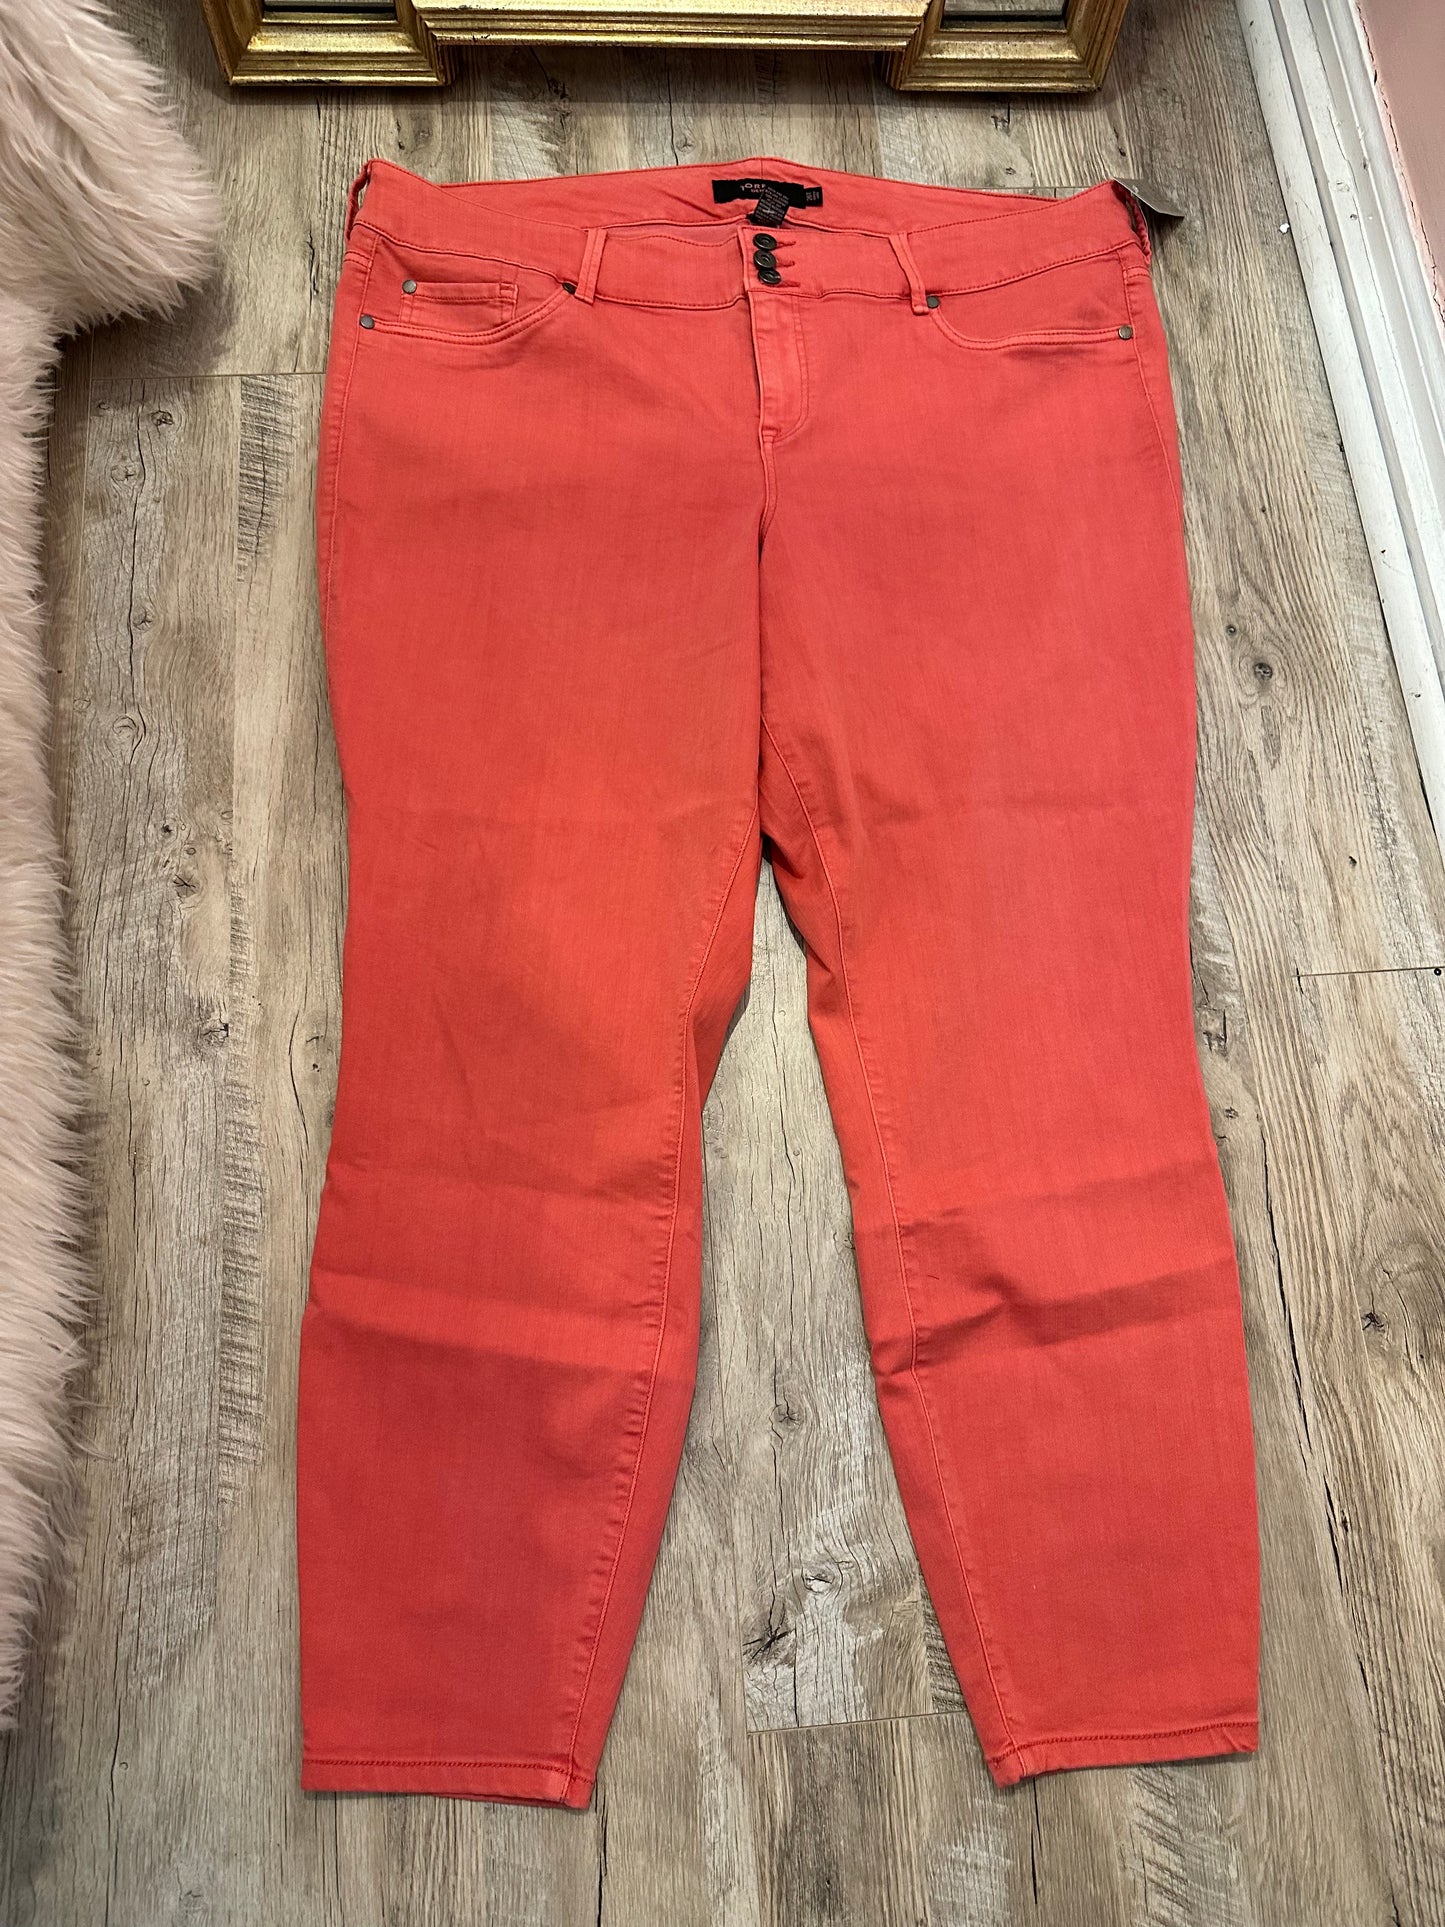 EUC Torrid Jeans Womens 26T Coral Pink Skinny Jegging Stretch Denim